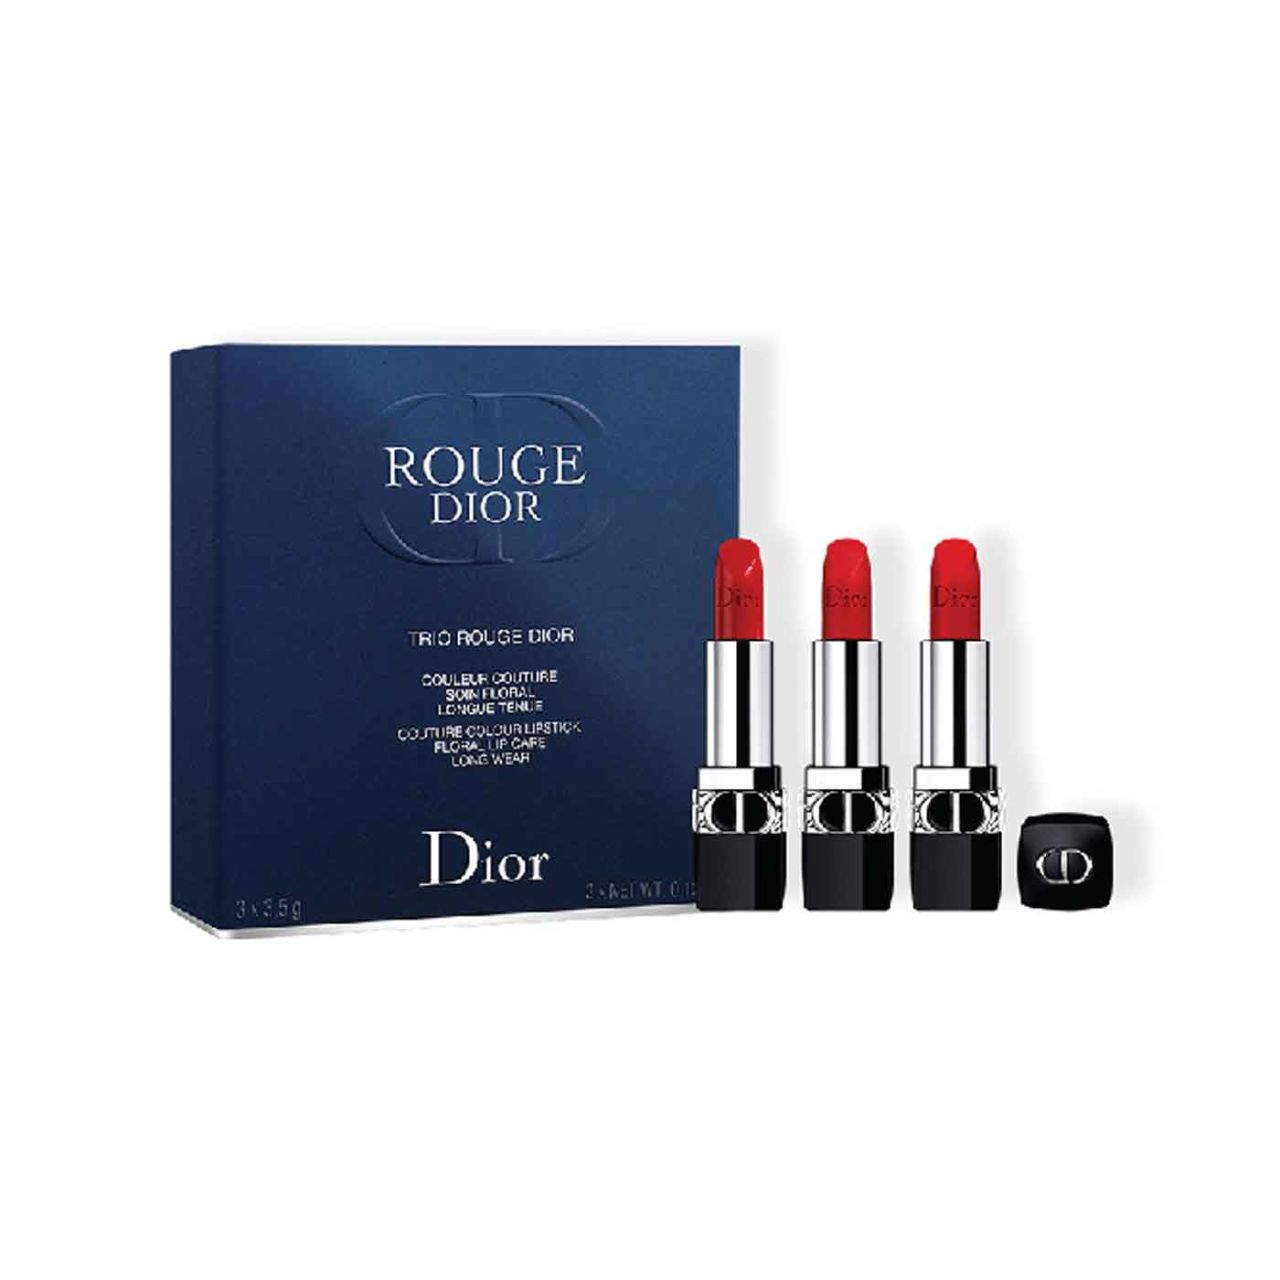 DIOR Travel Trio Rouge Dior